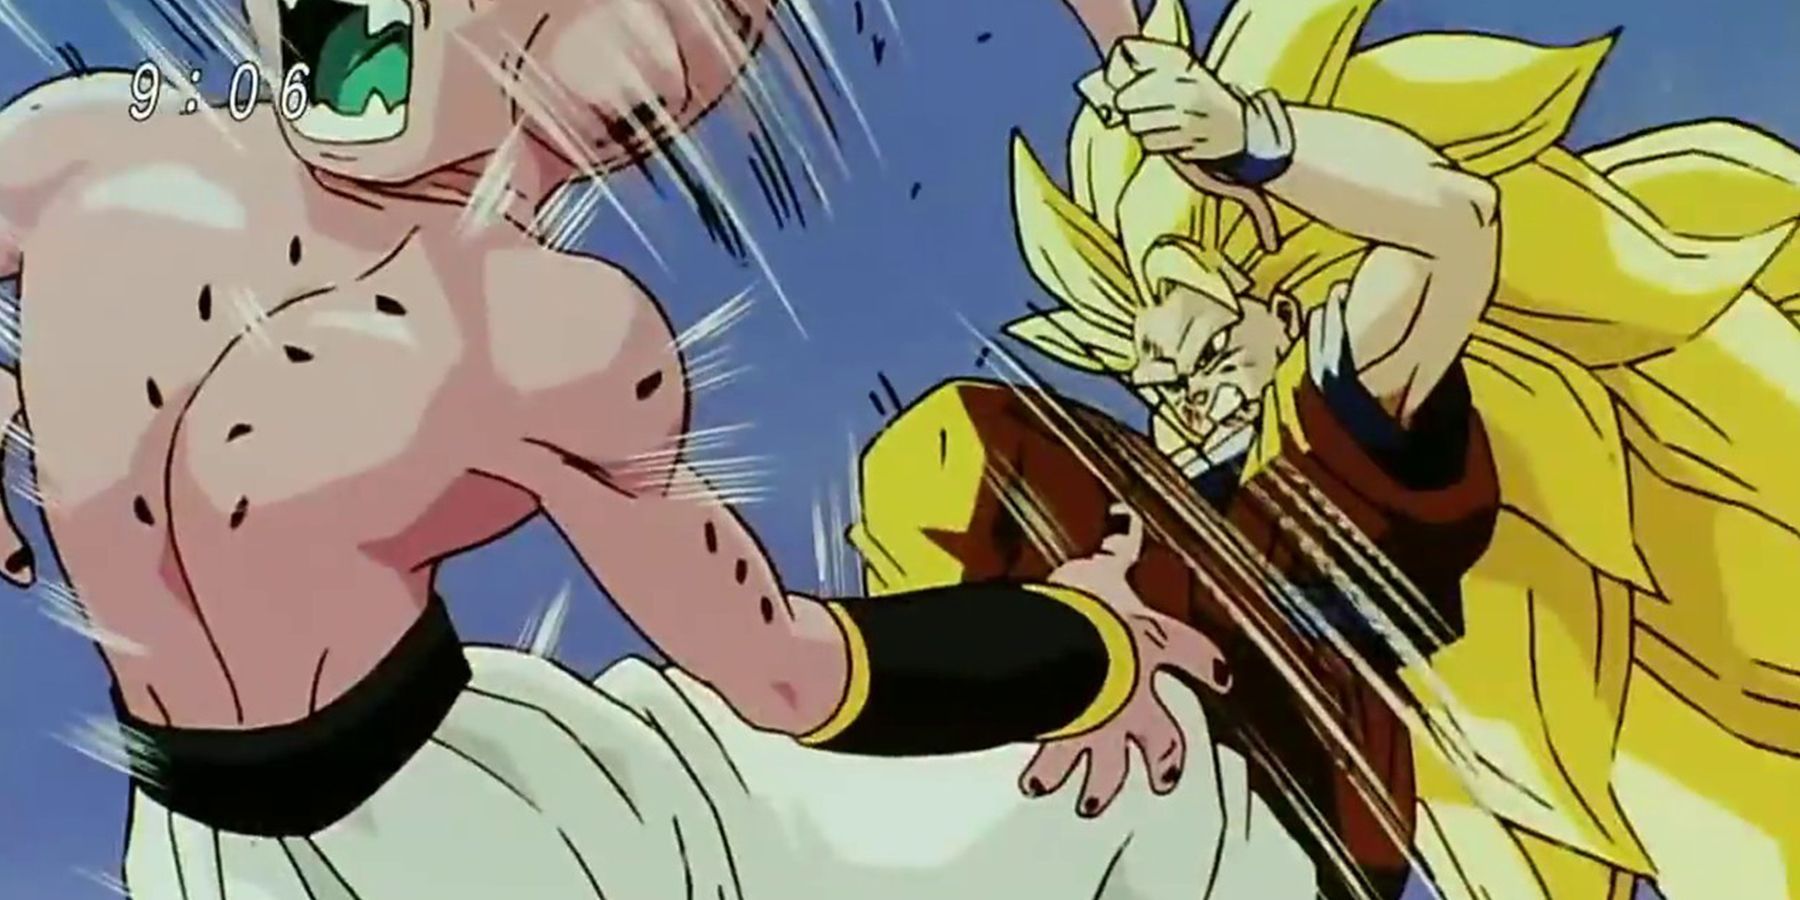 Super Saiyan 3 Goku fighting Kid Buu in Dragon Ball Z